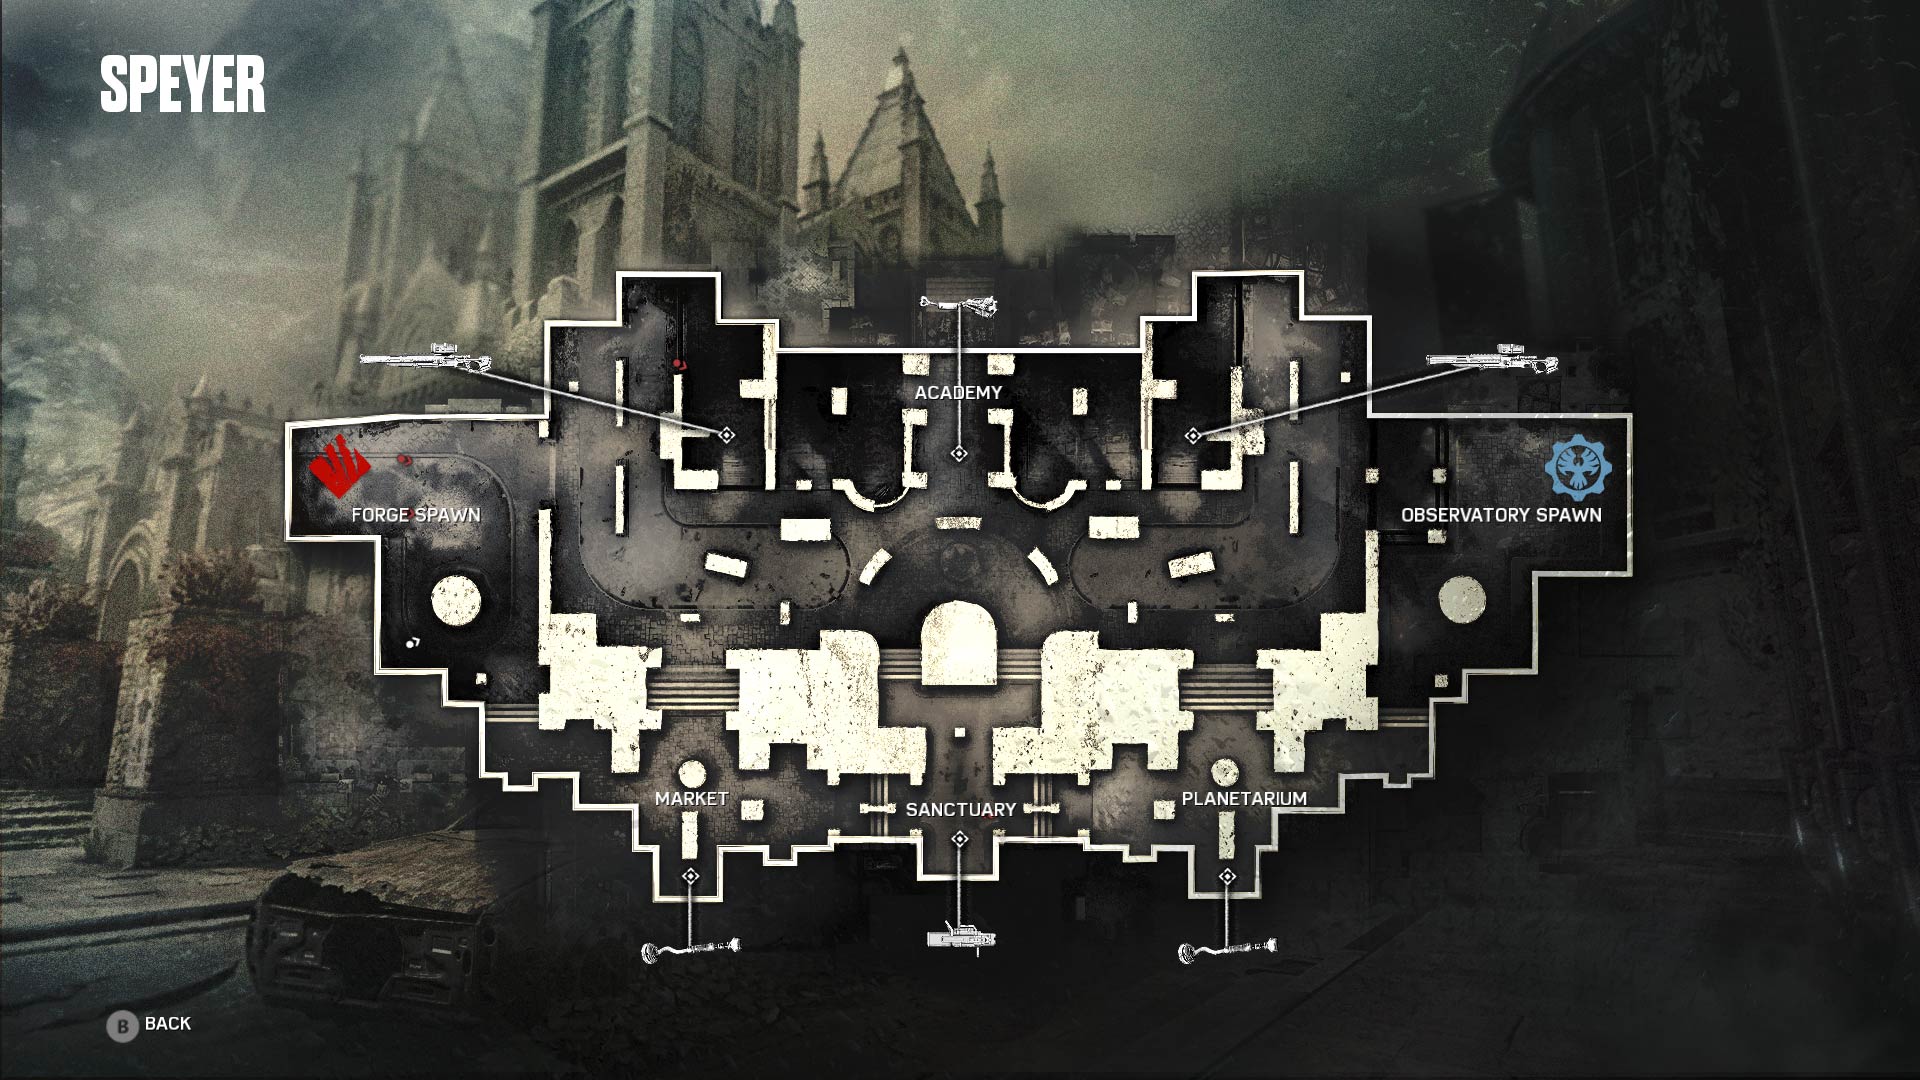 Gears of War 4 Speyer Multiplayer Map